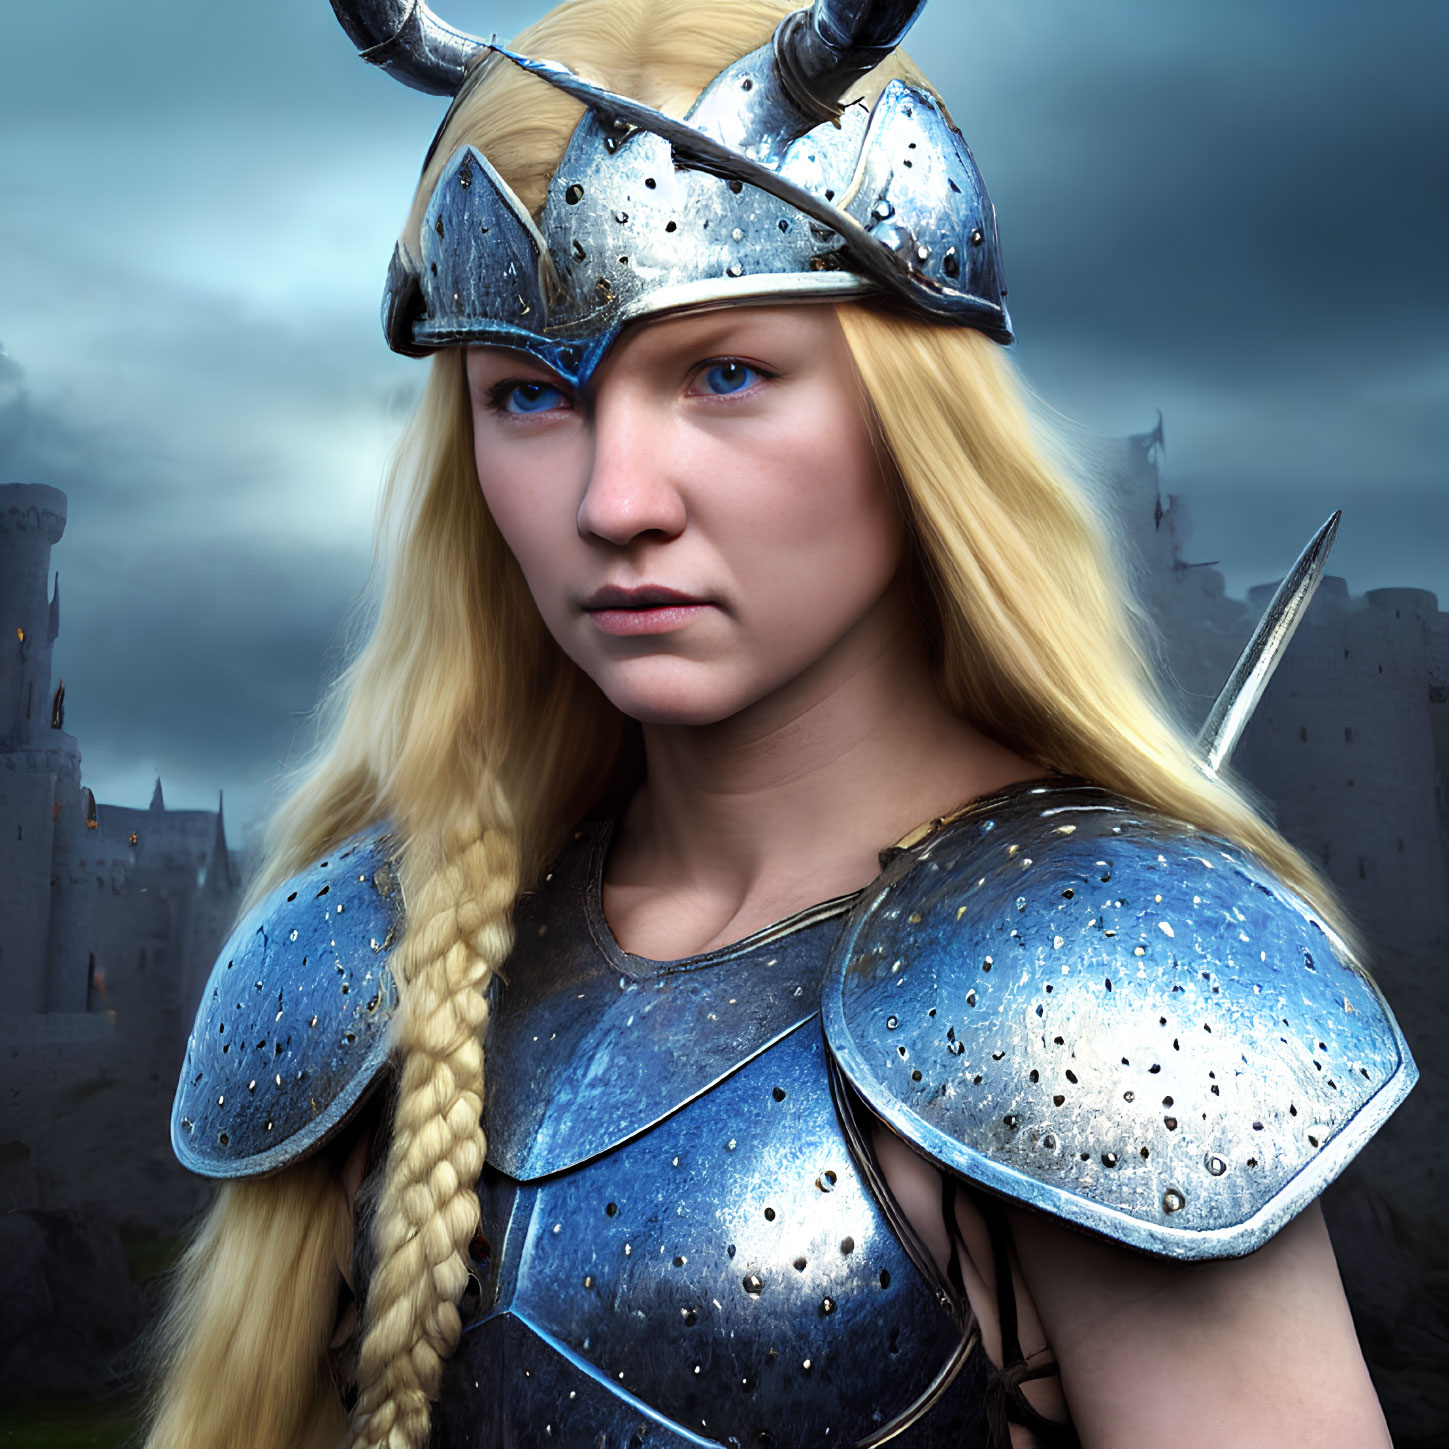 Blonde Viking warrior in horned helmet against stormy sky